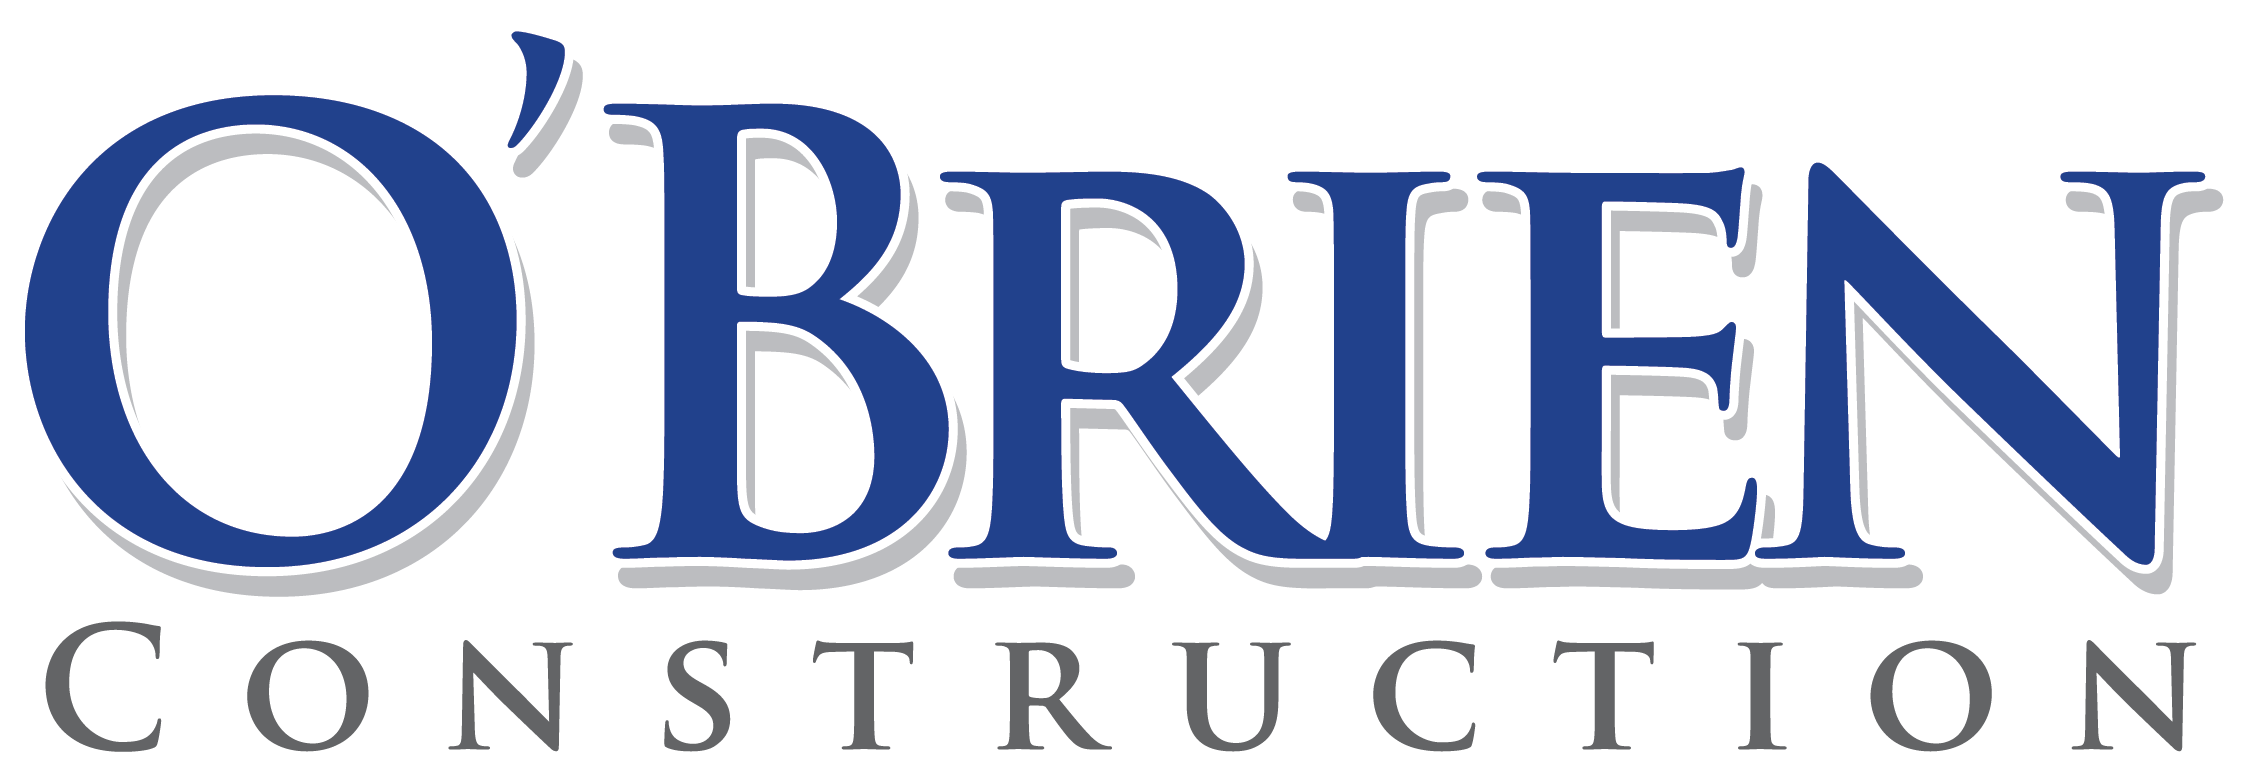 O_Brien Construction Logo - Transparent Background